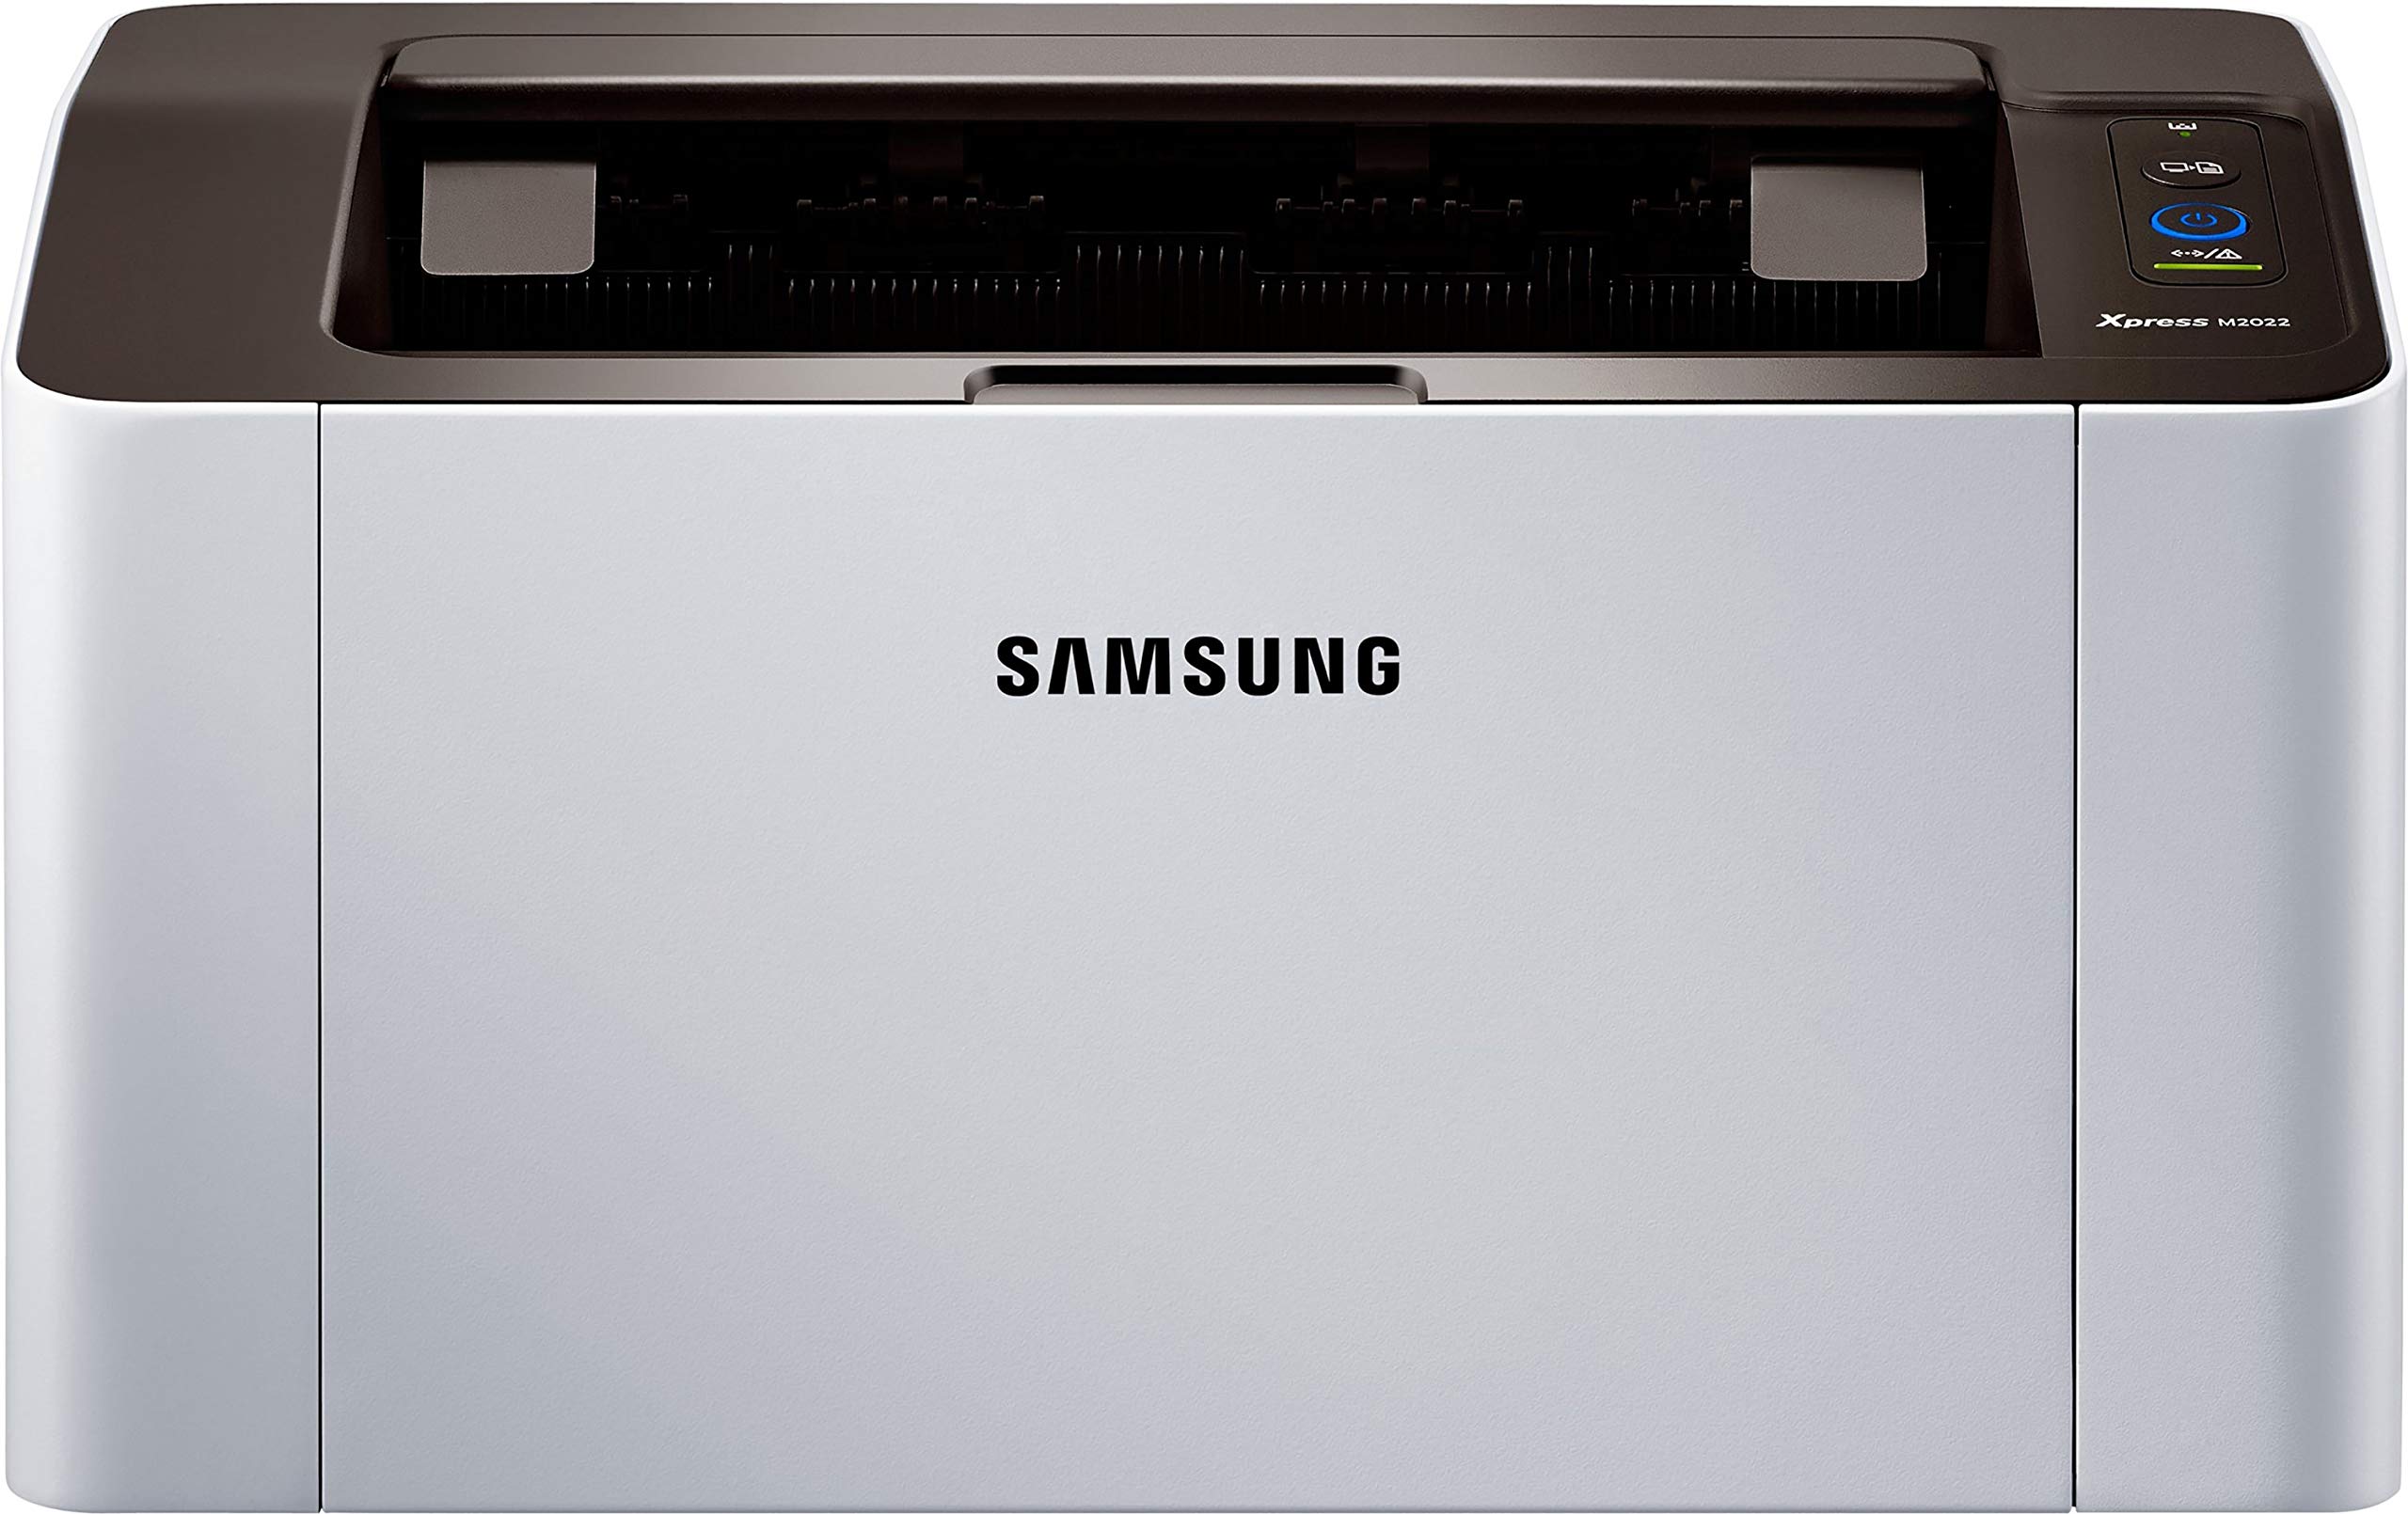 Samsung network printer with an error message